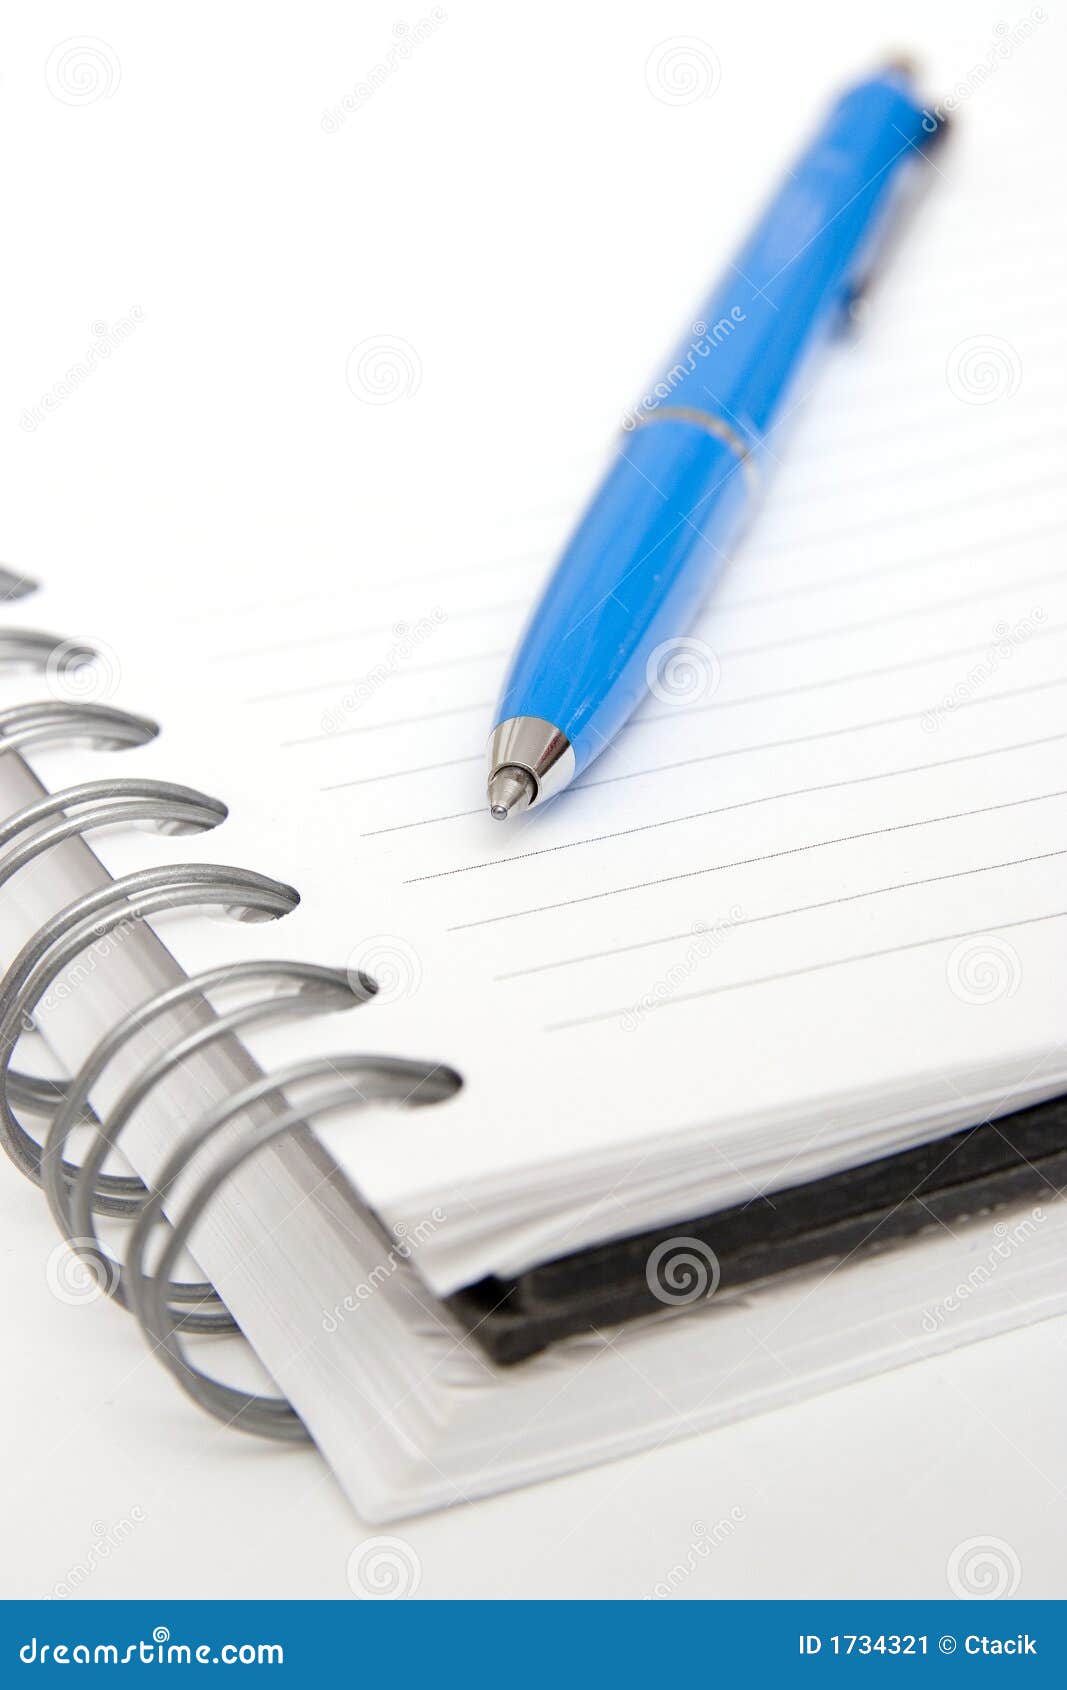 pen on notebook